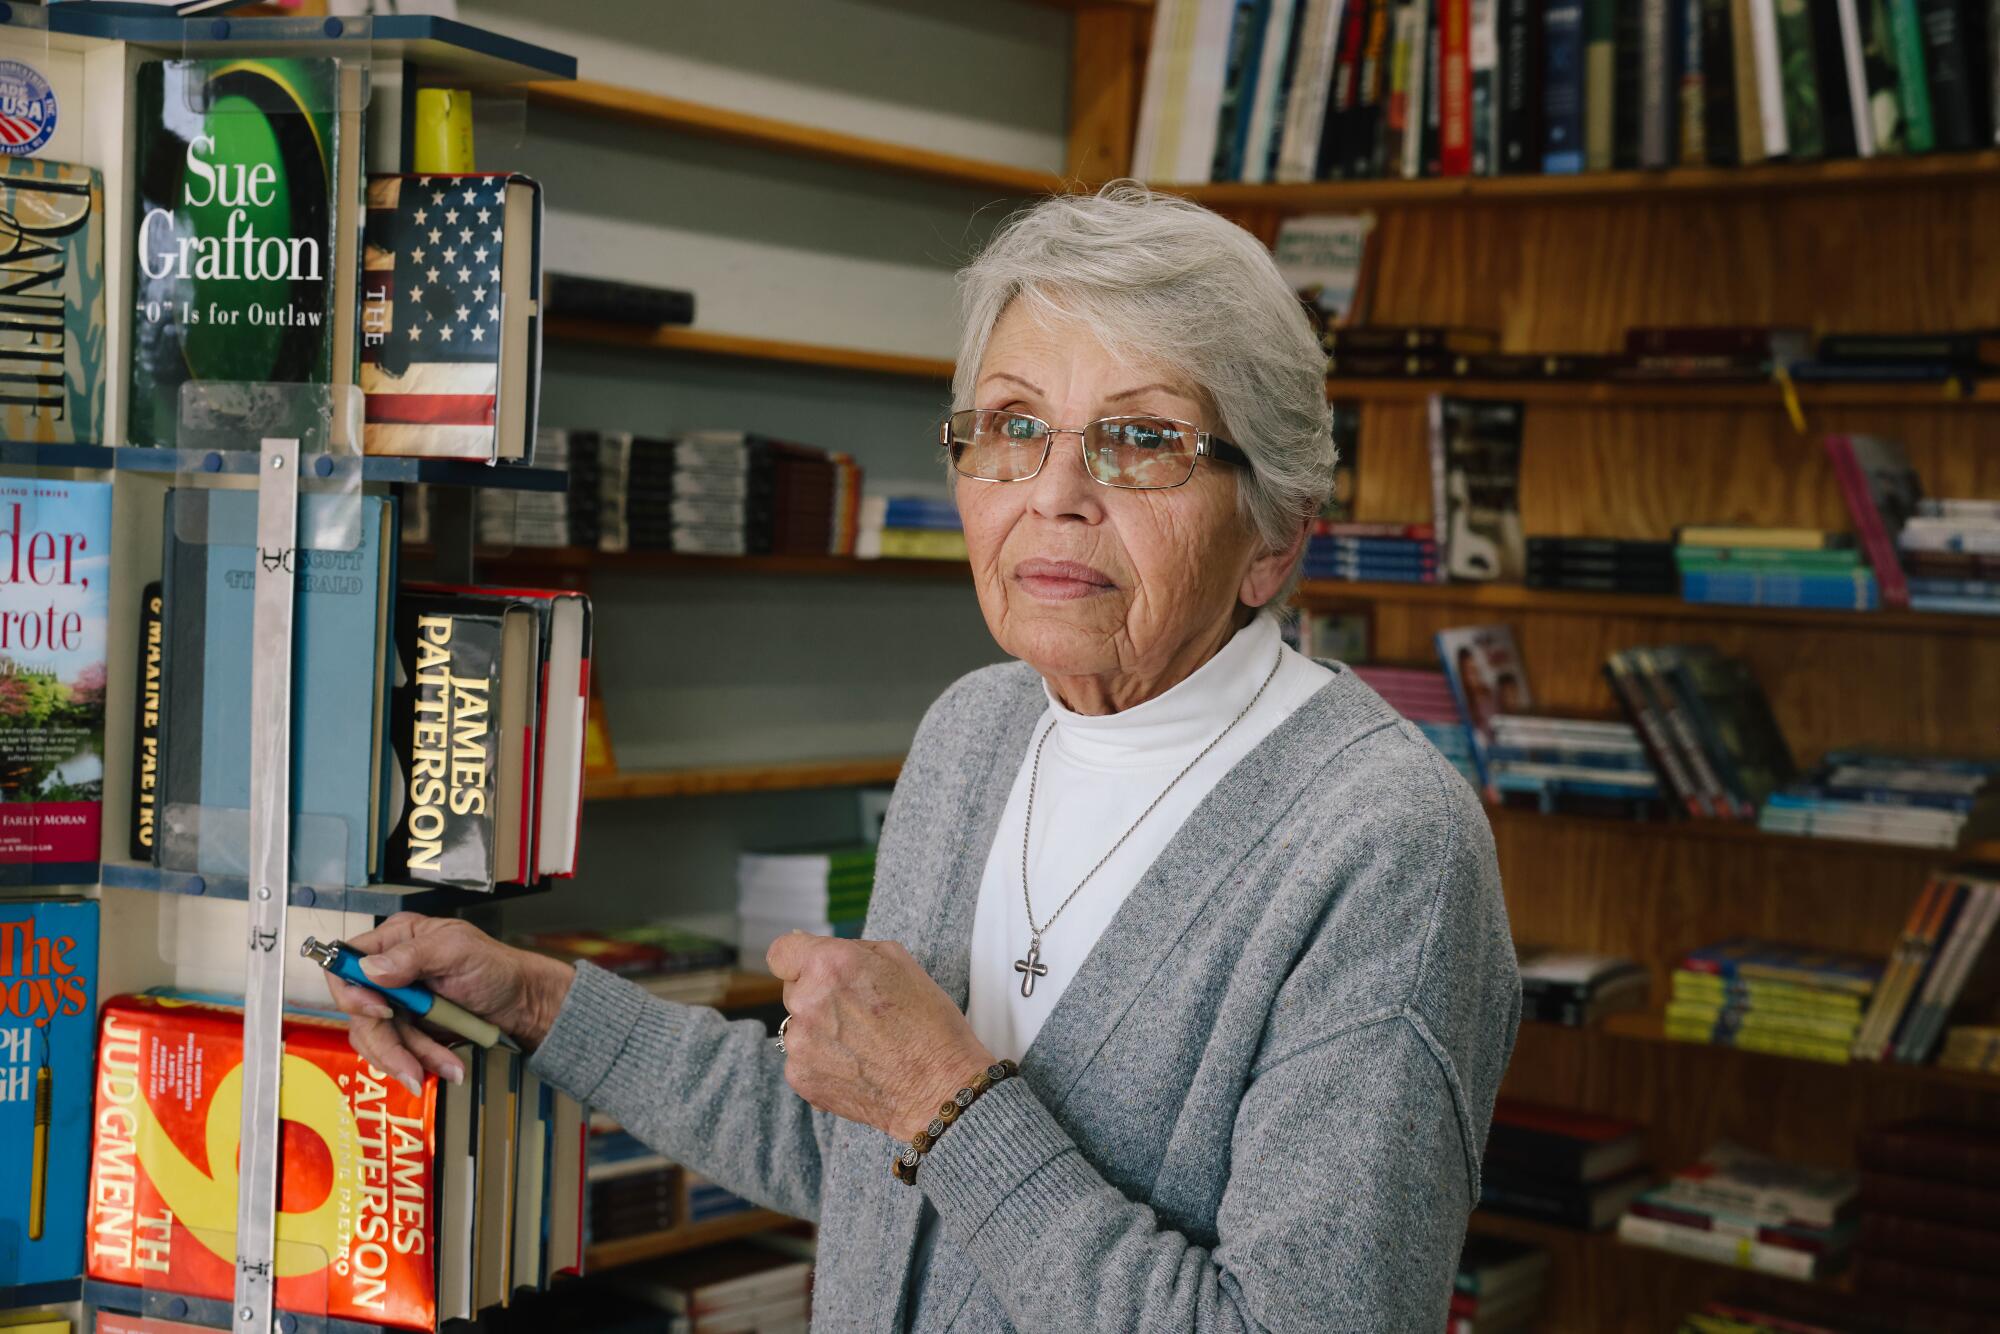 A woman poses among books.